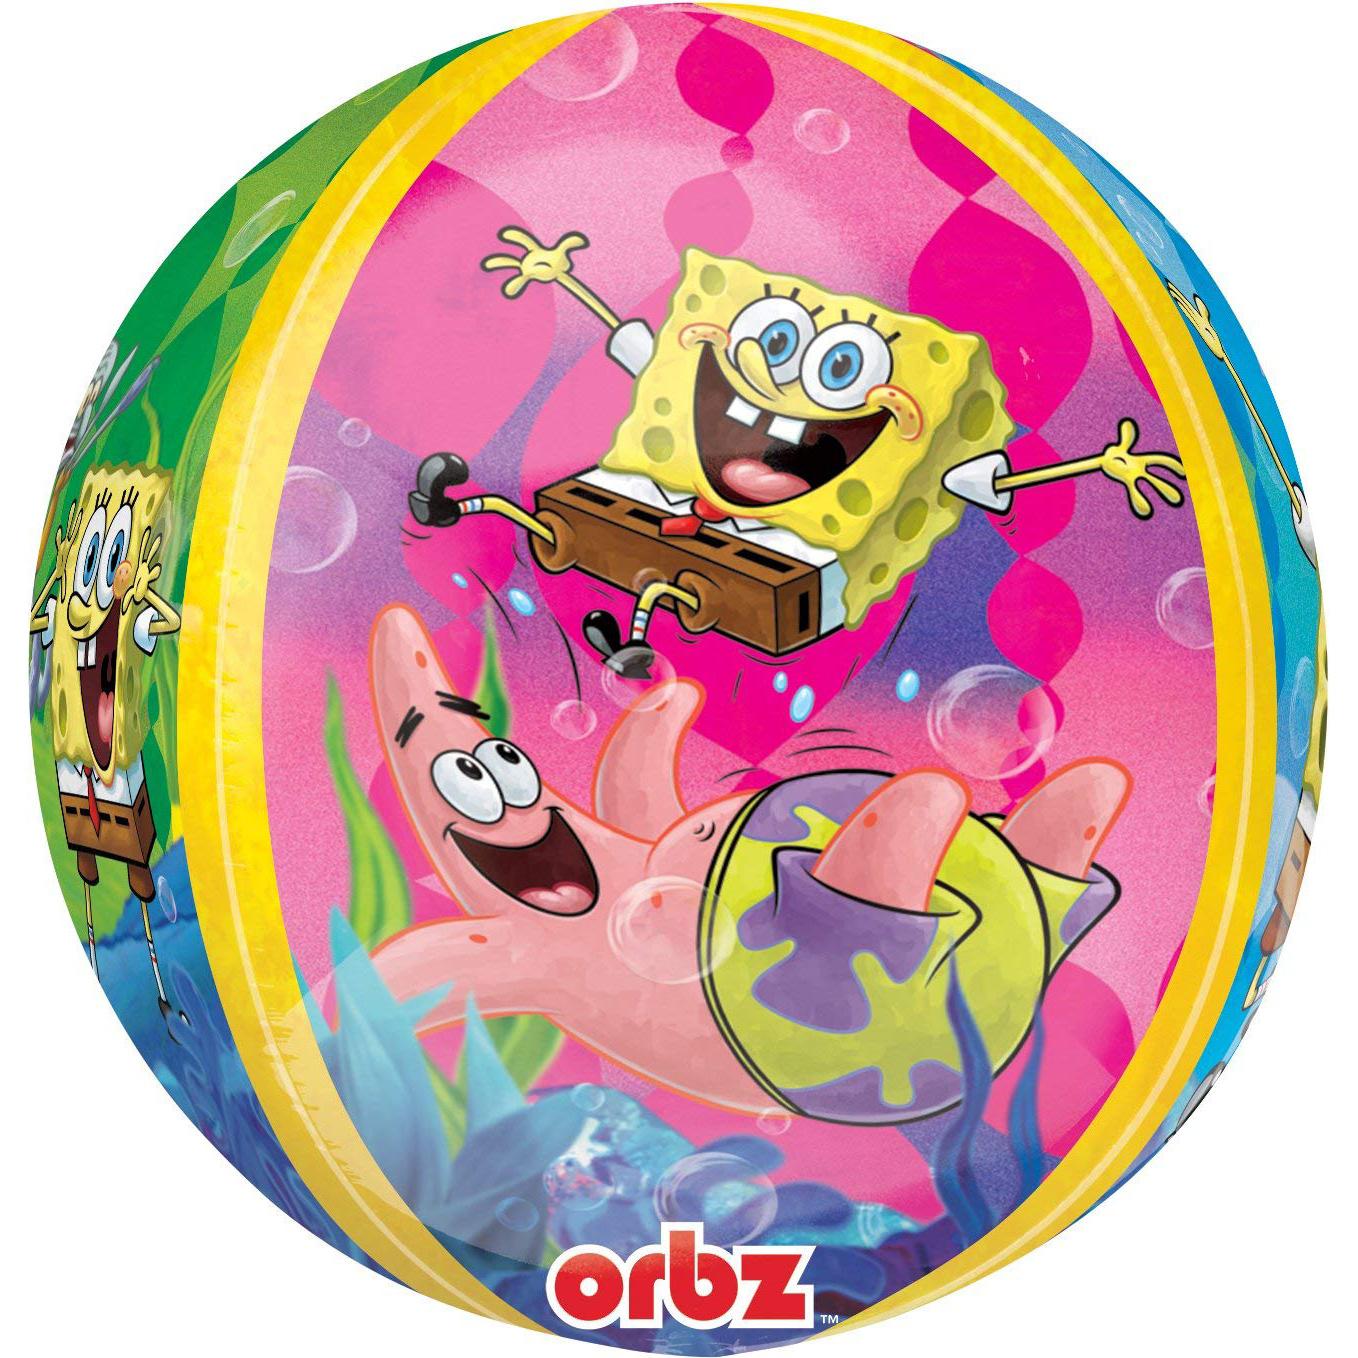 SpongeBob SquarePants Orbz Balloon 38x40cm Balloons & Streamers - Party Centre